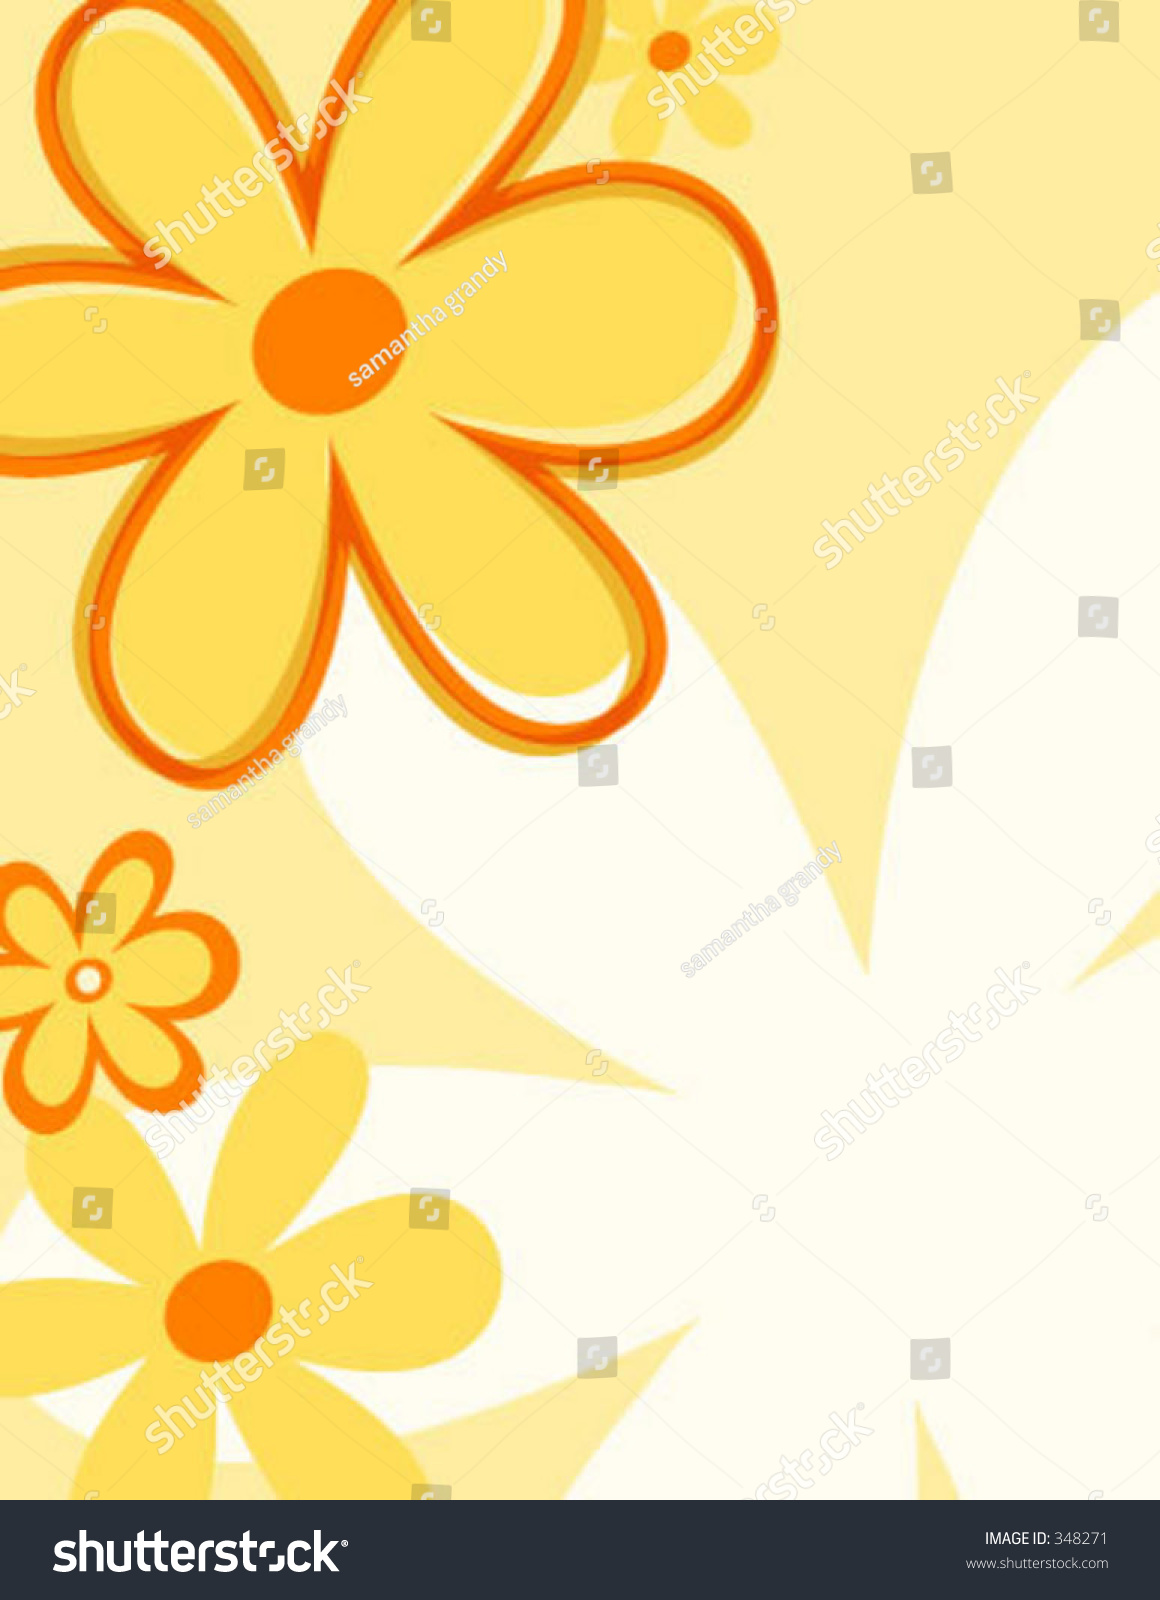 Vector Flower Background. - 348271 : Shutterstock